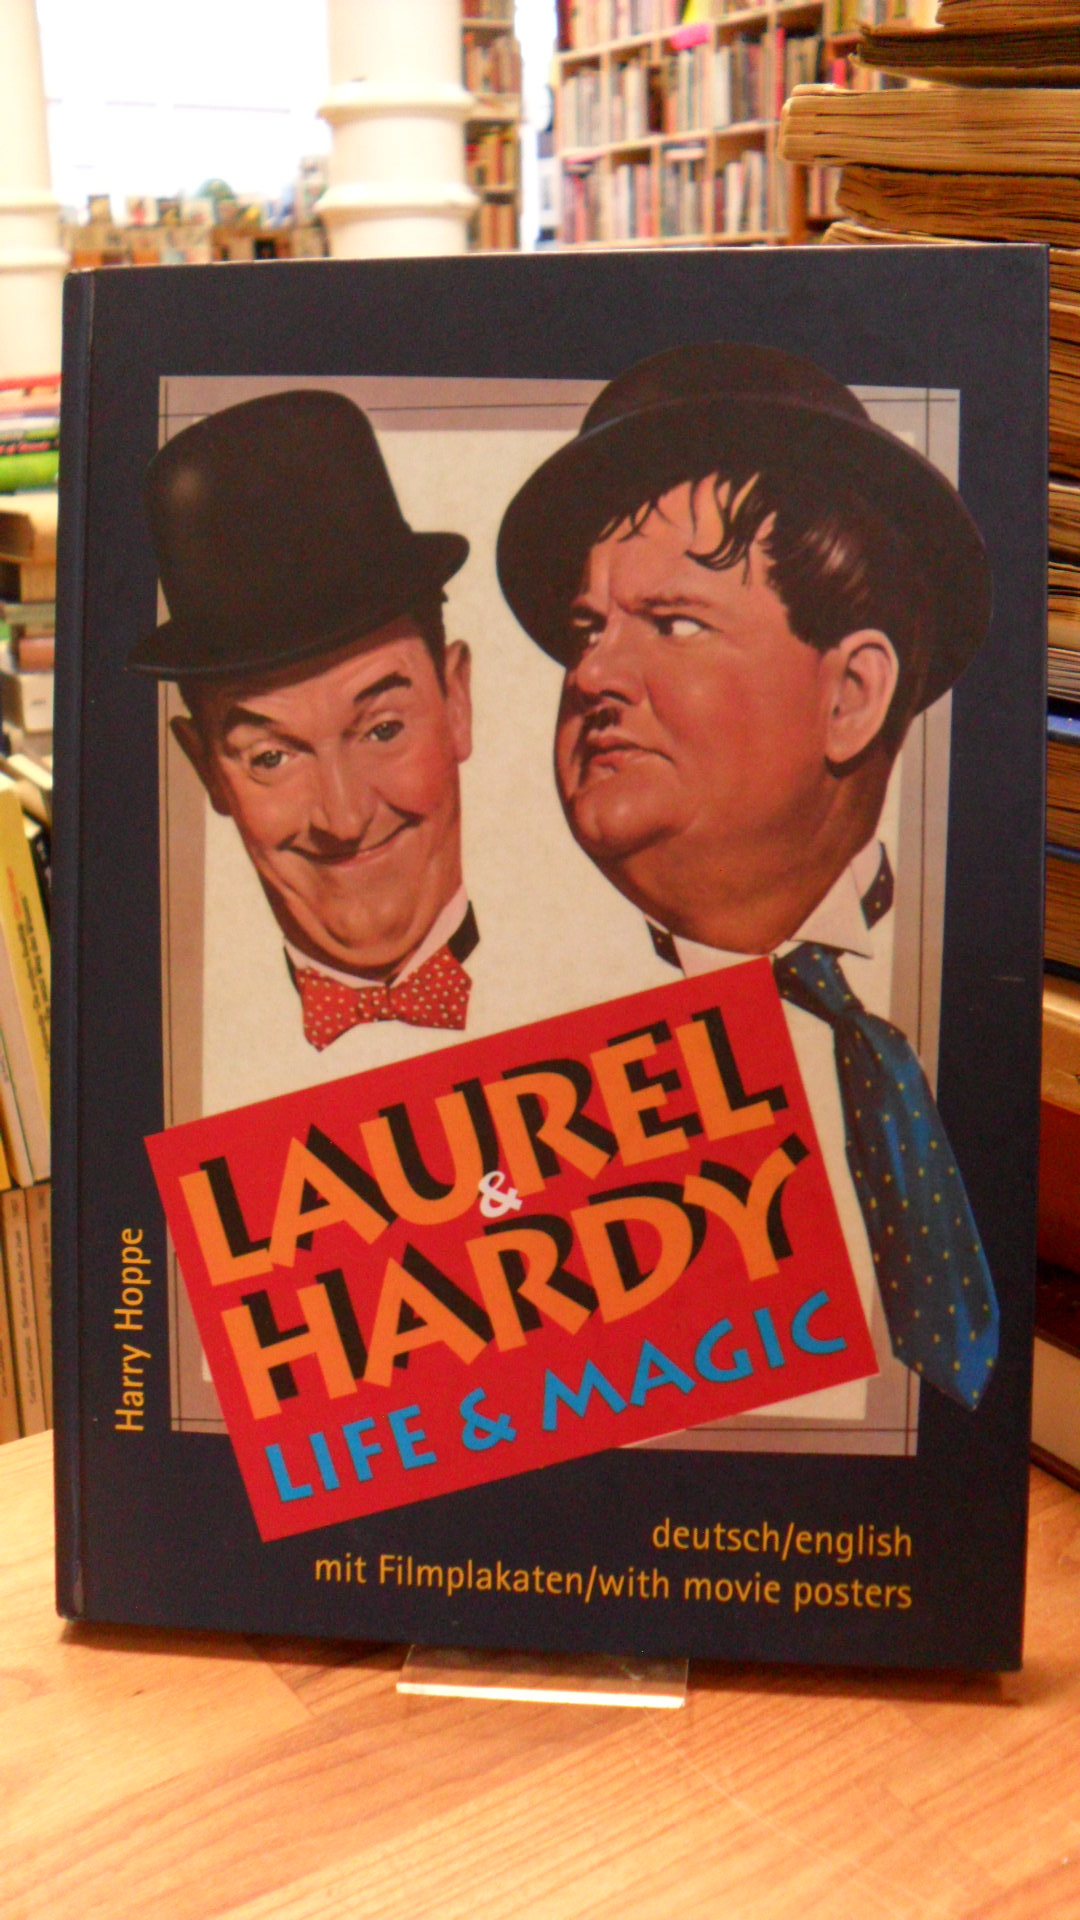 Hoppe, Laurel & Hardy – Life & Magic – Deutsch/English – [Mit Filmplakaten],